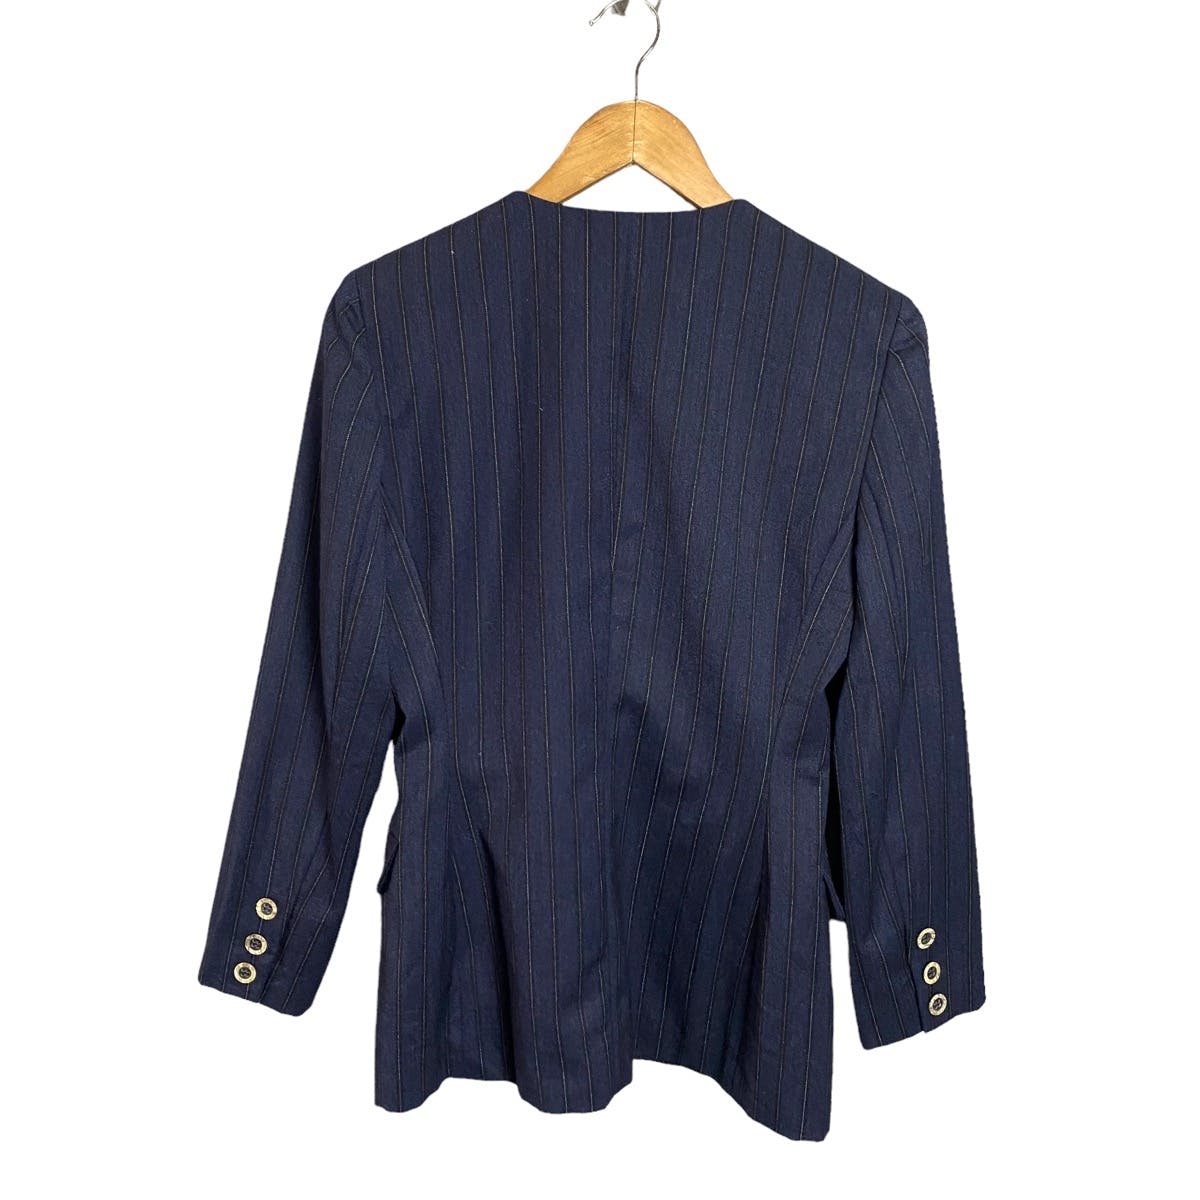 Christian Dior Monsieur - Christian Dior Single-Breasted Coat slant button Jacket - 4